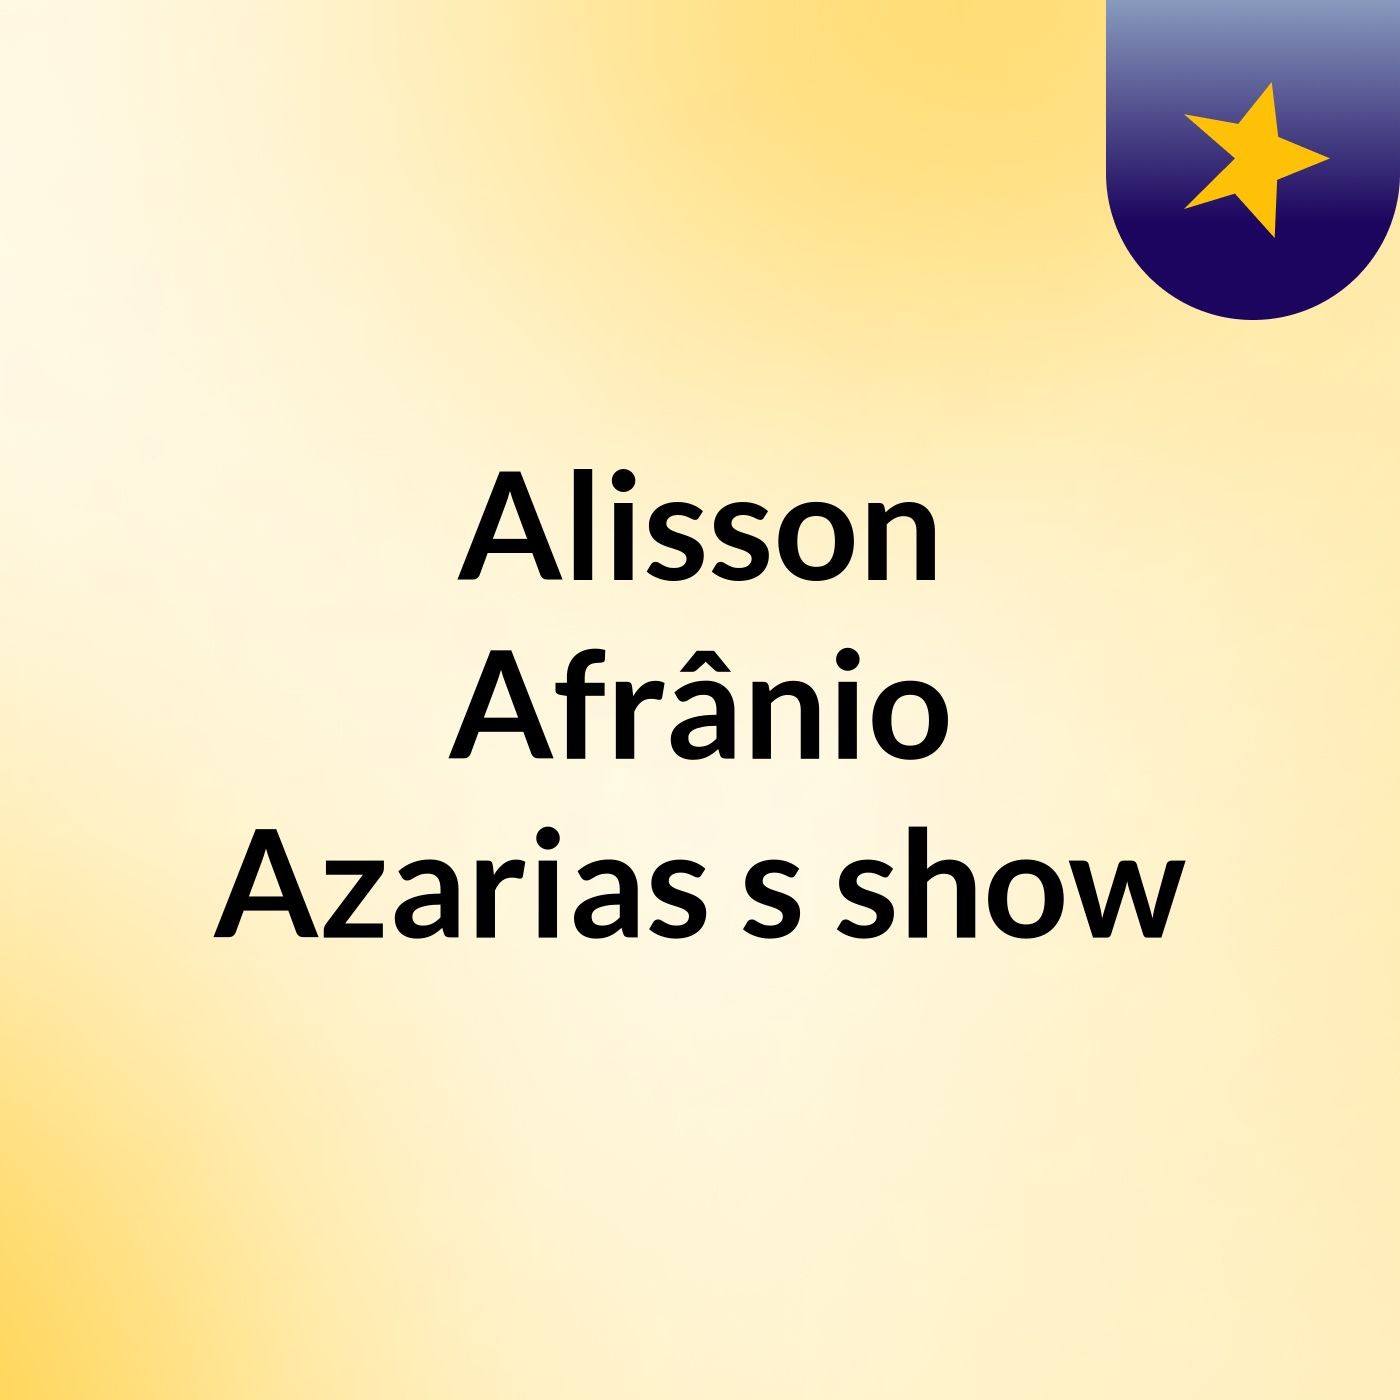 Alisson Afrânio Azarias's show